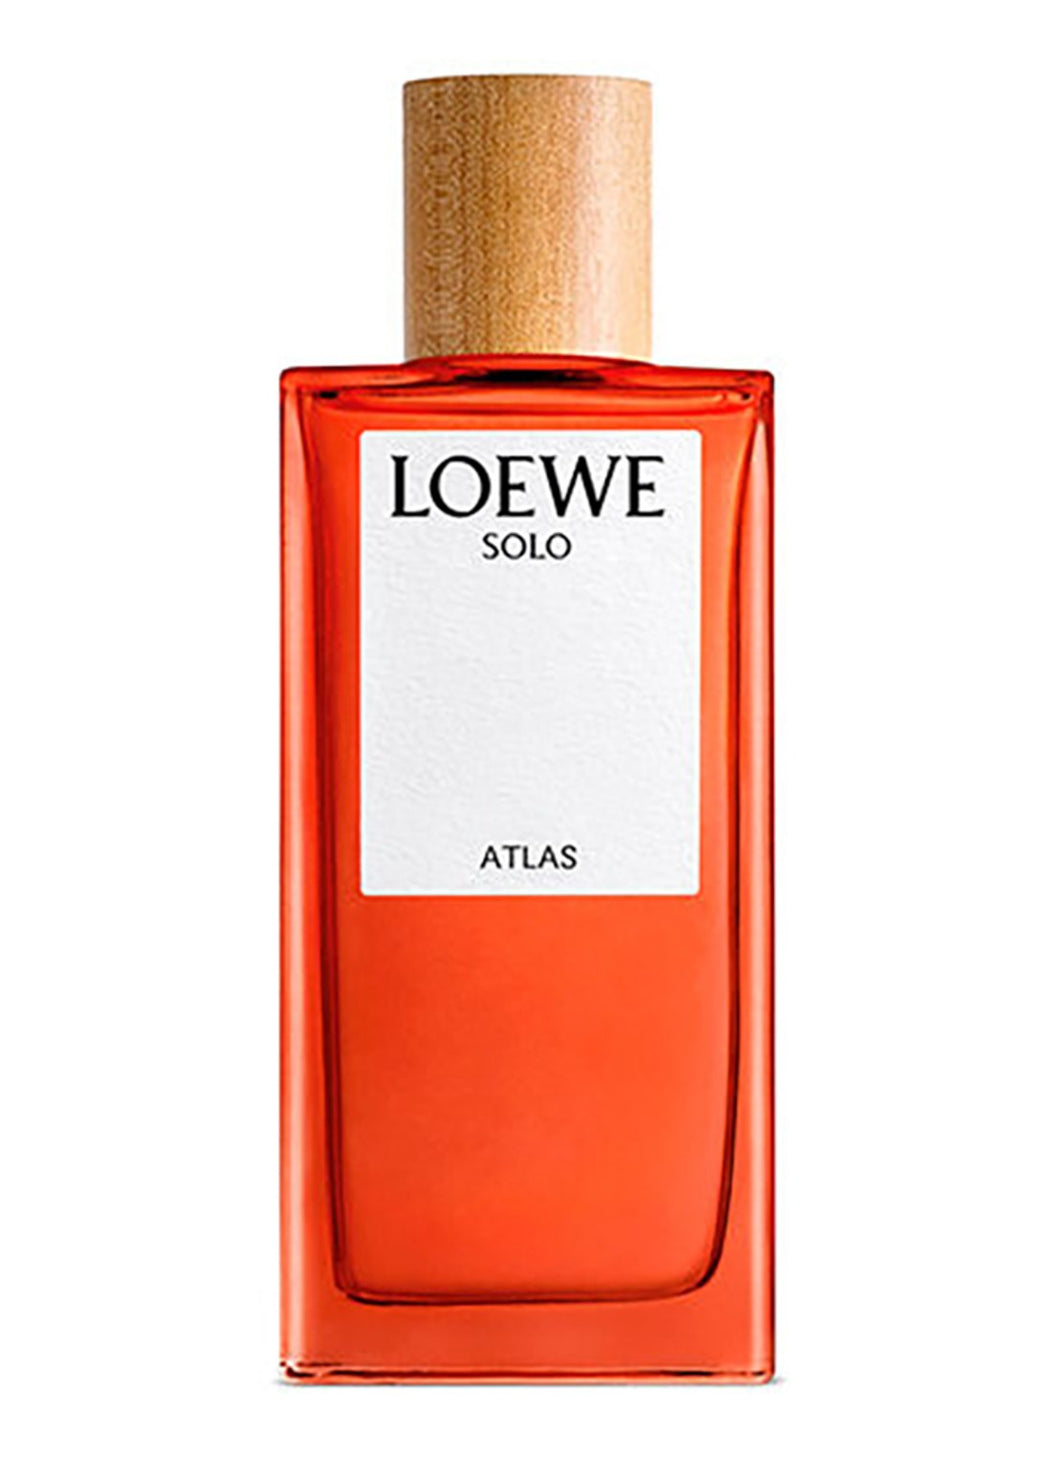 LOEWE - SOLO Atlas